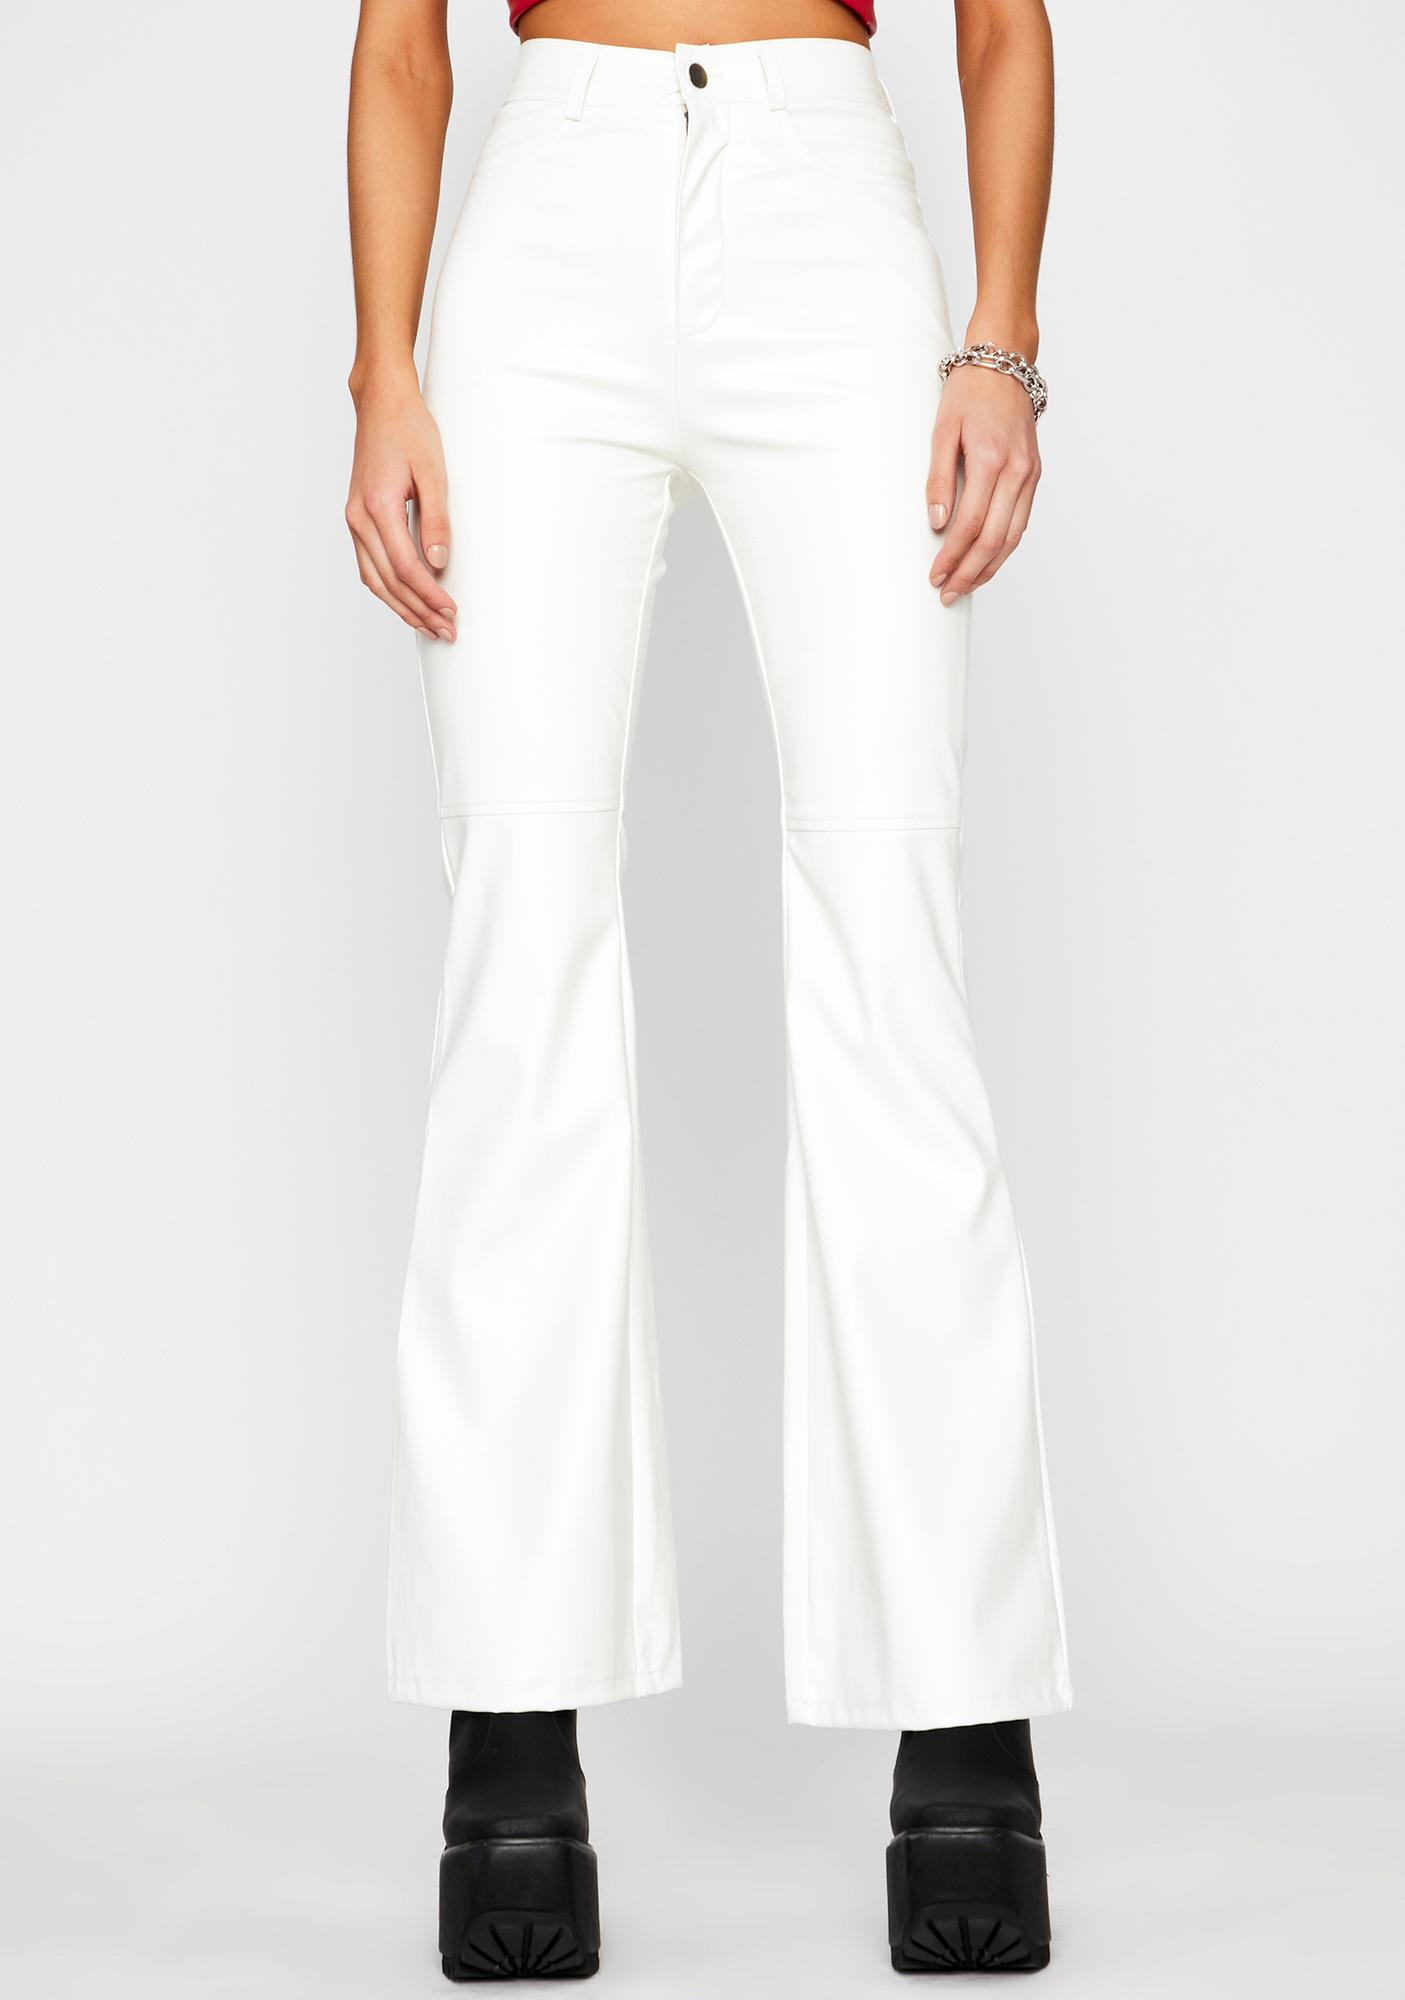 white faux leather pants